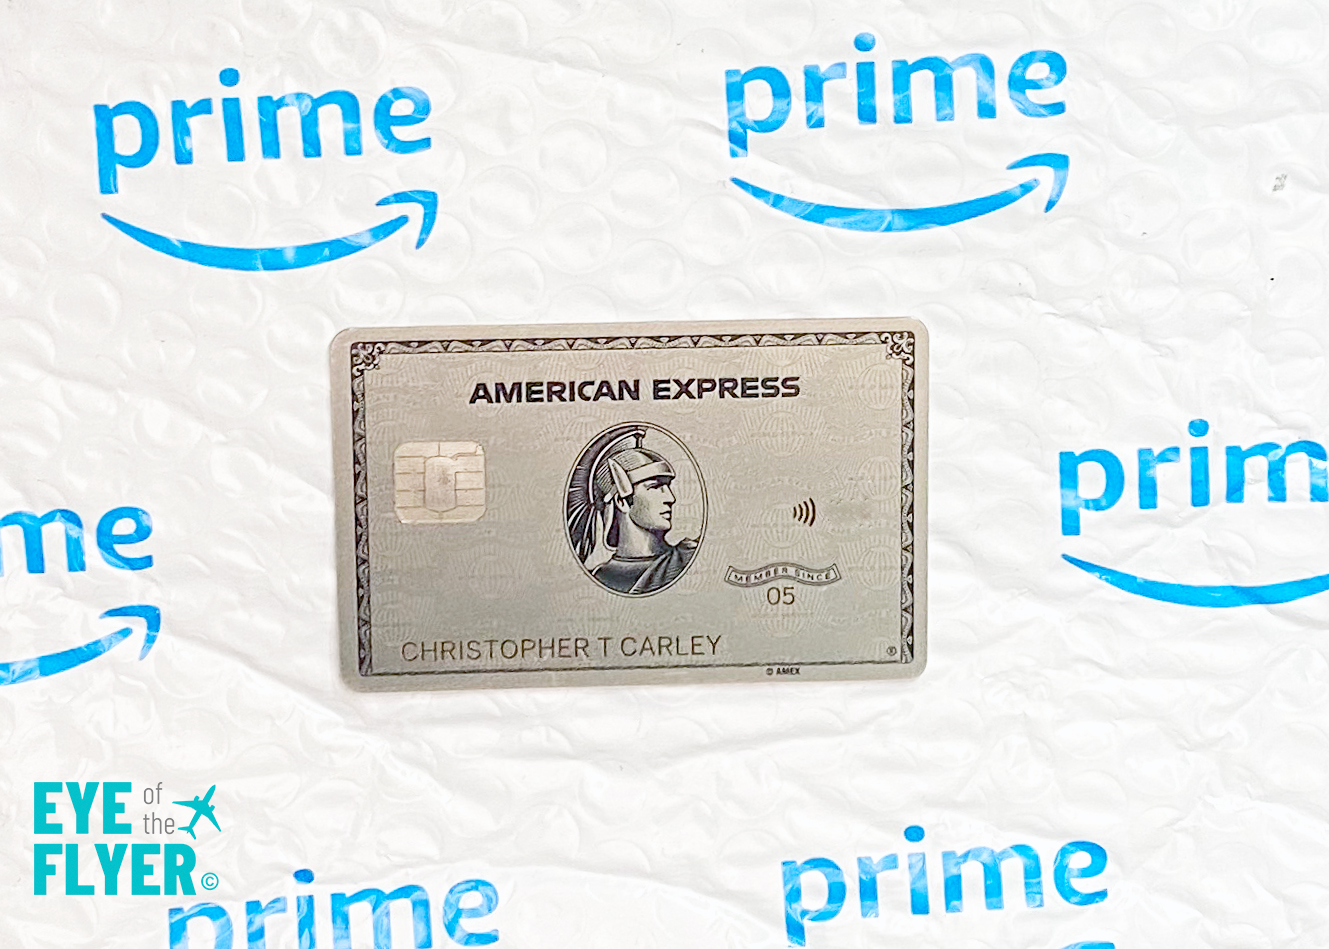 Amazon Amex Offer: Earn 5 Bonus Points per Dollar Spent! - Eye of the Flyer